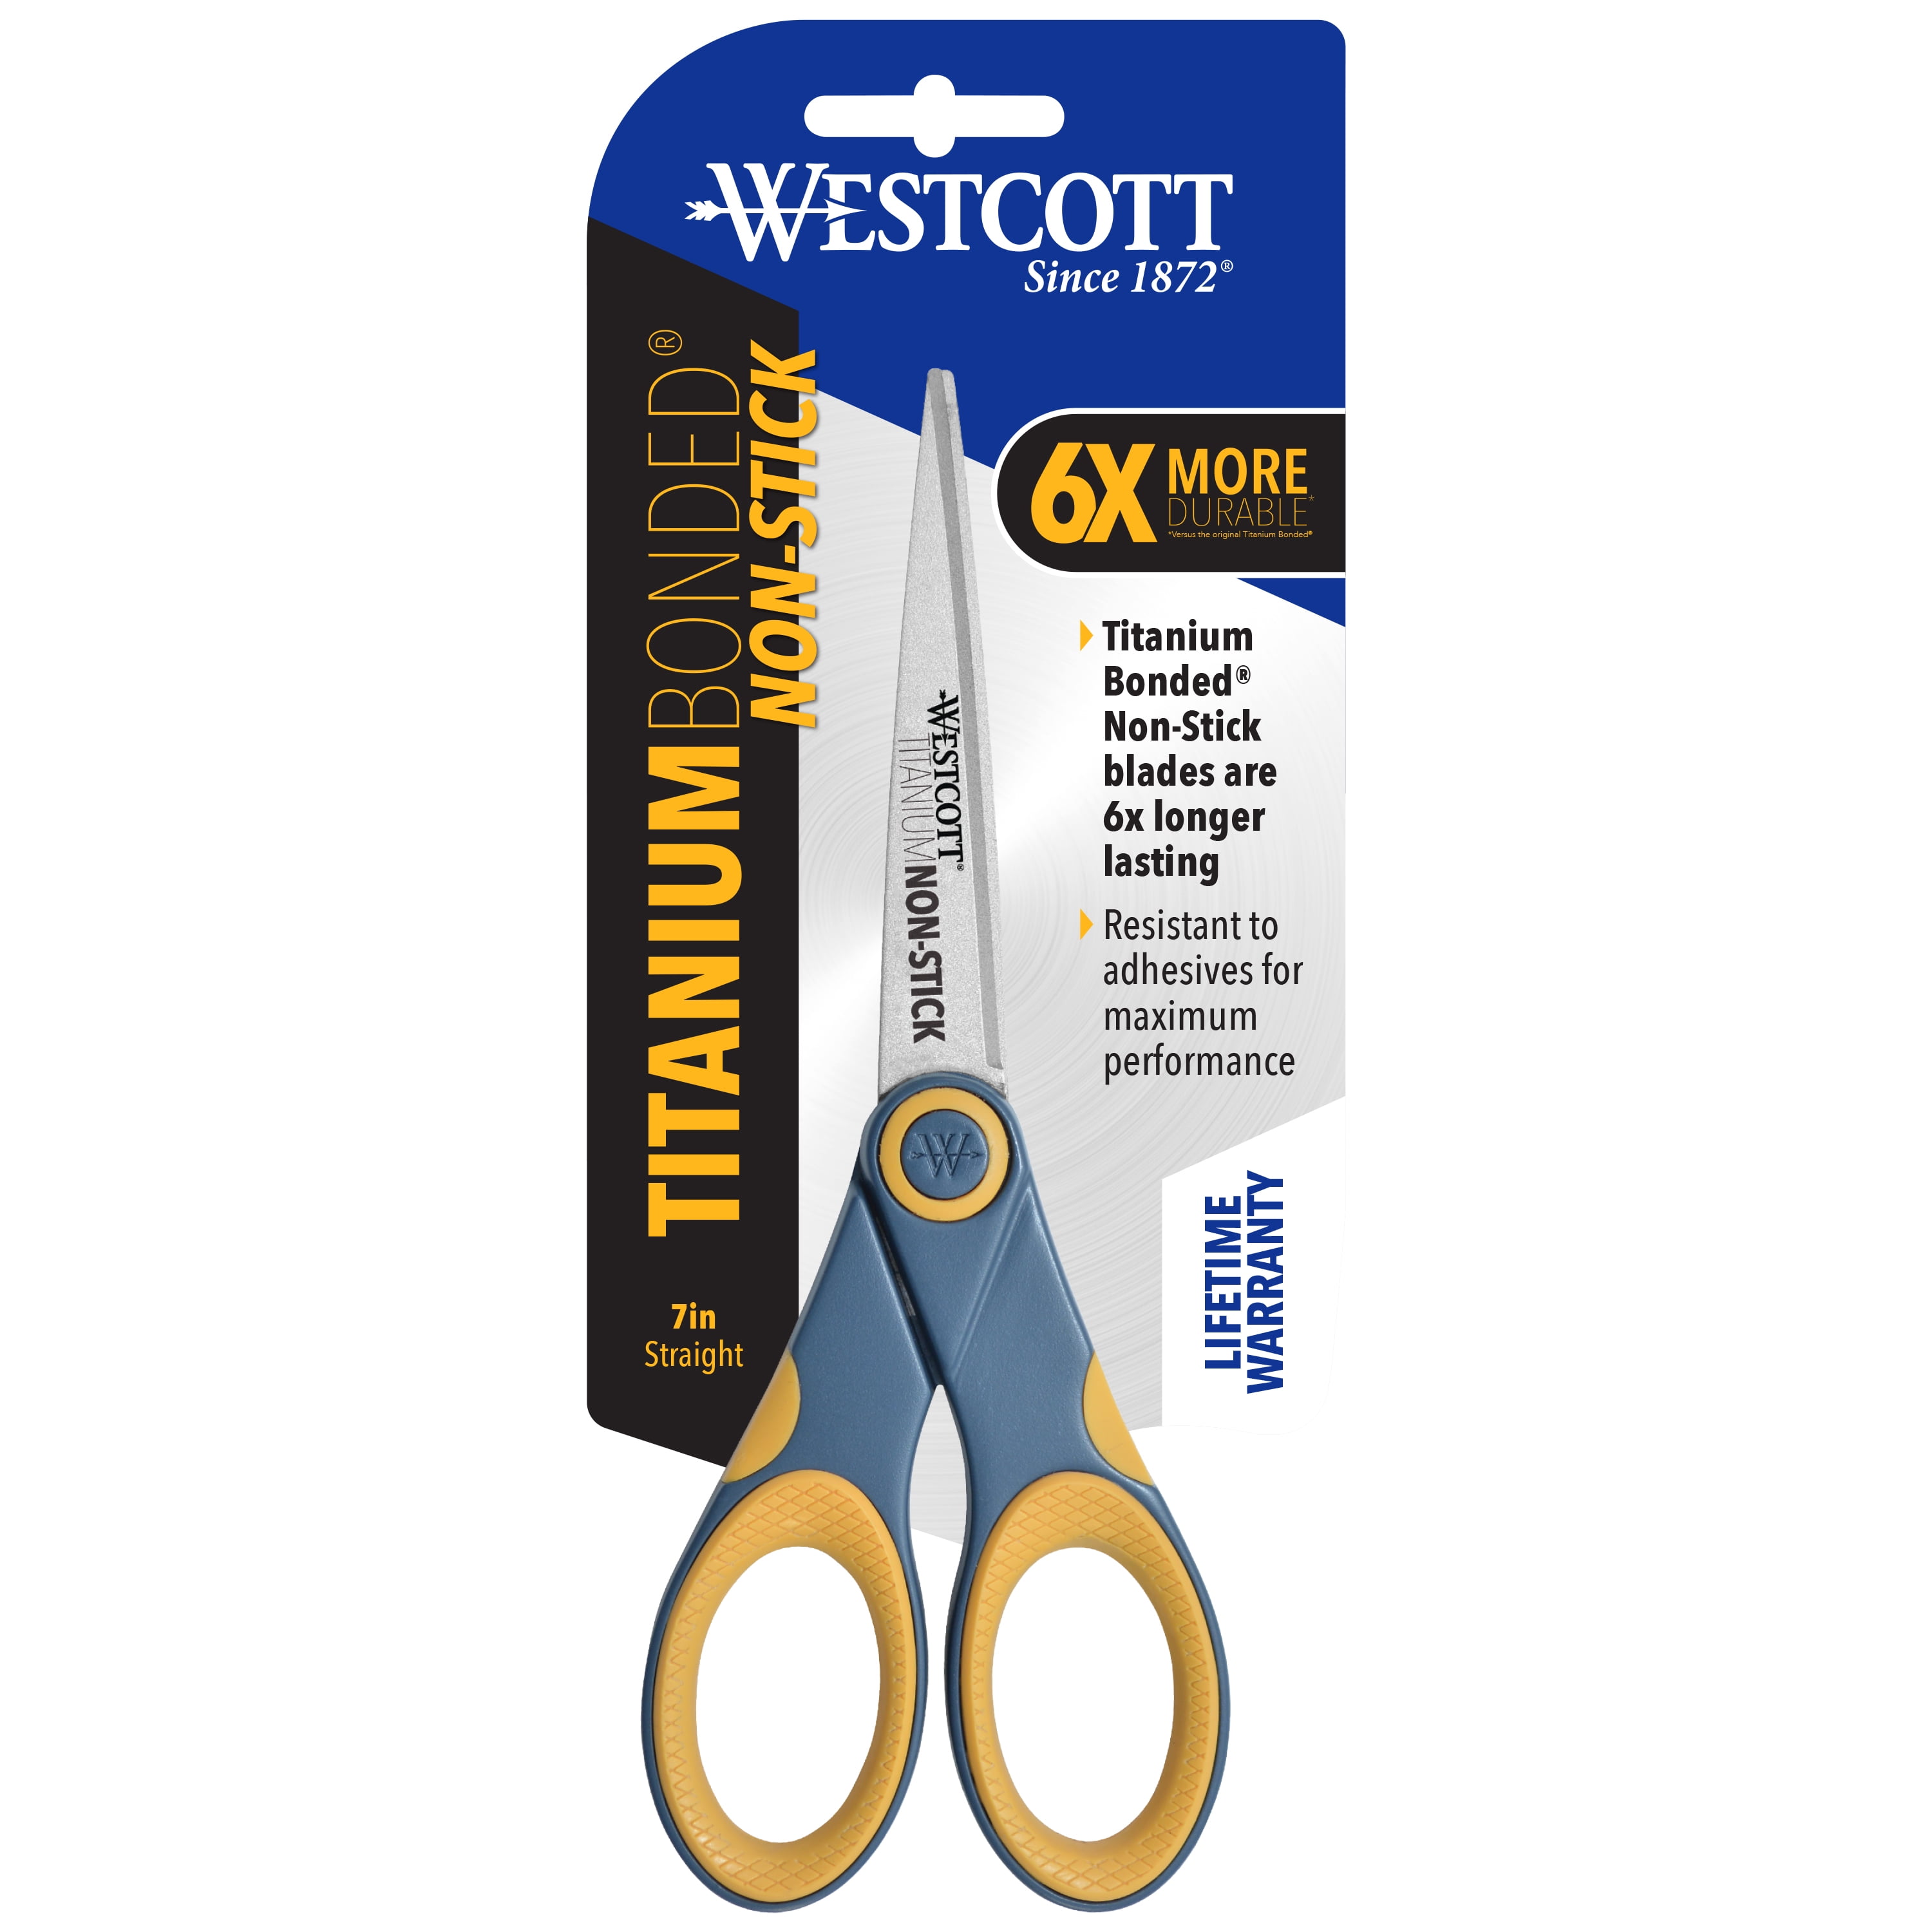 Westcott - Westcott Titanium Bonded Scissors Set, 5 and 7, Pack of 2  (13824)